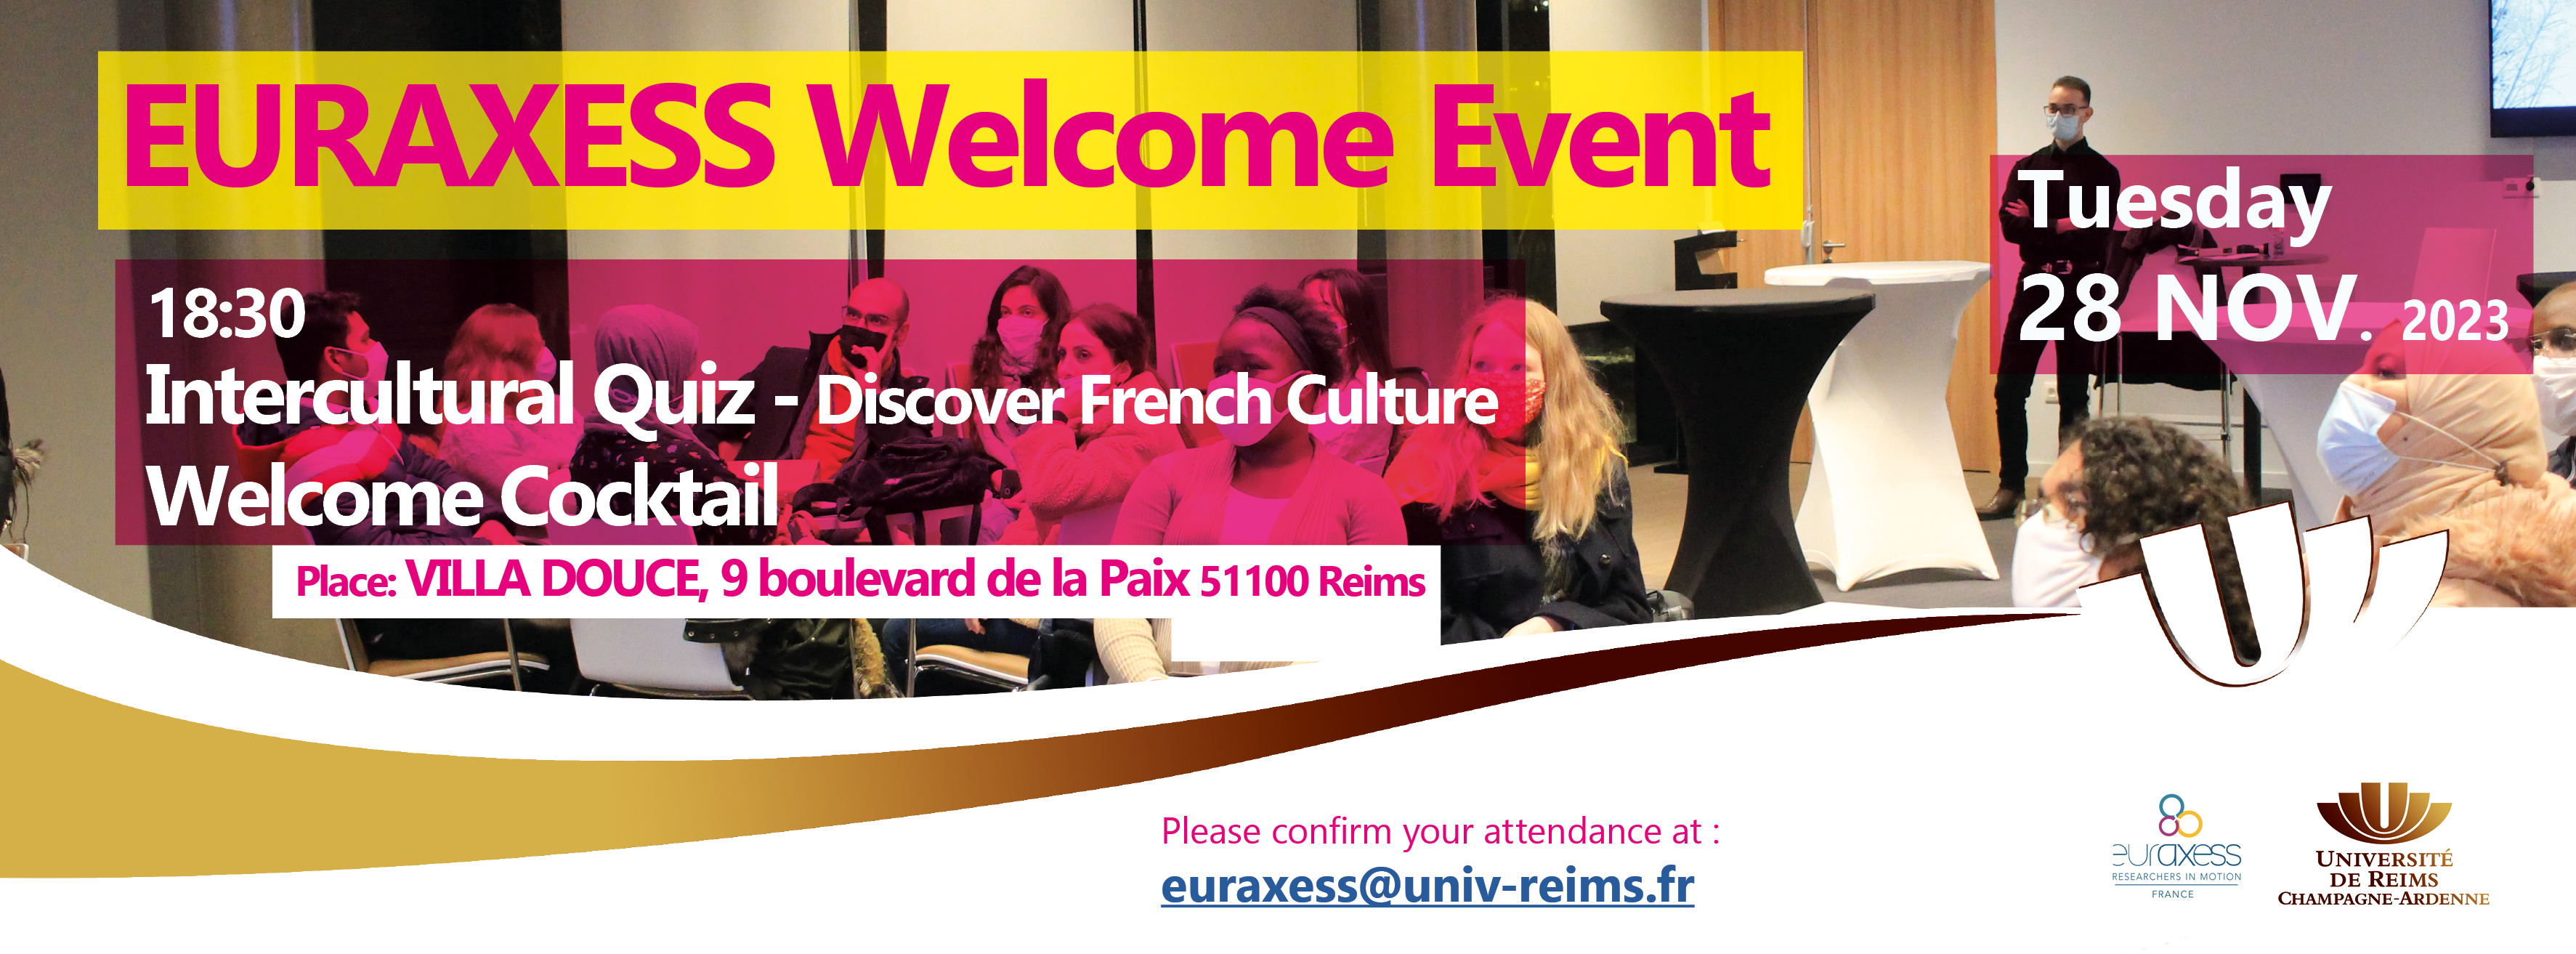 Euraxess Welcome Event